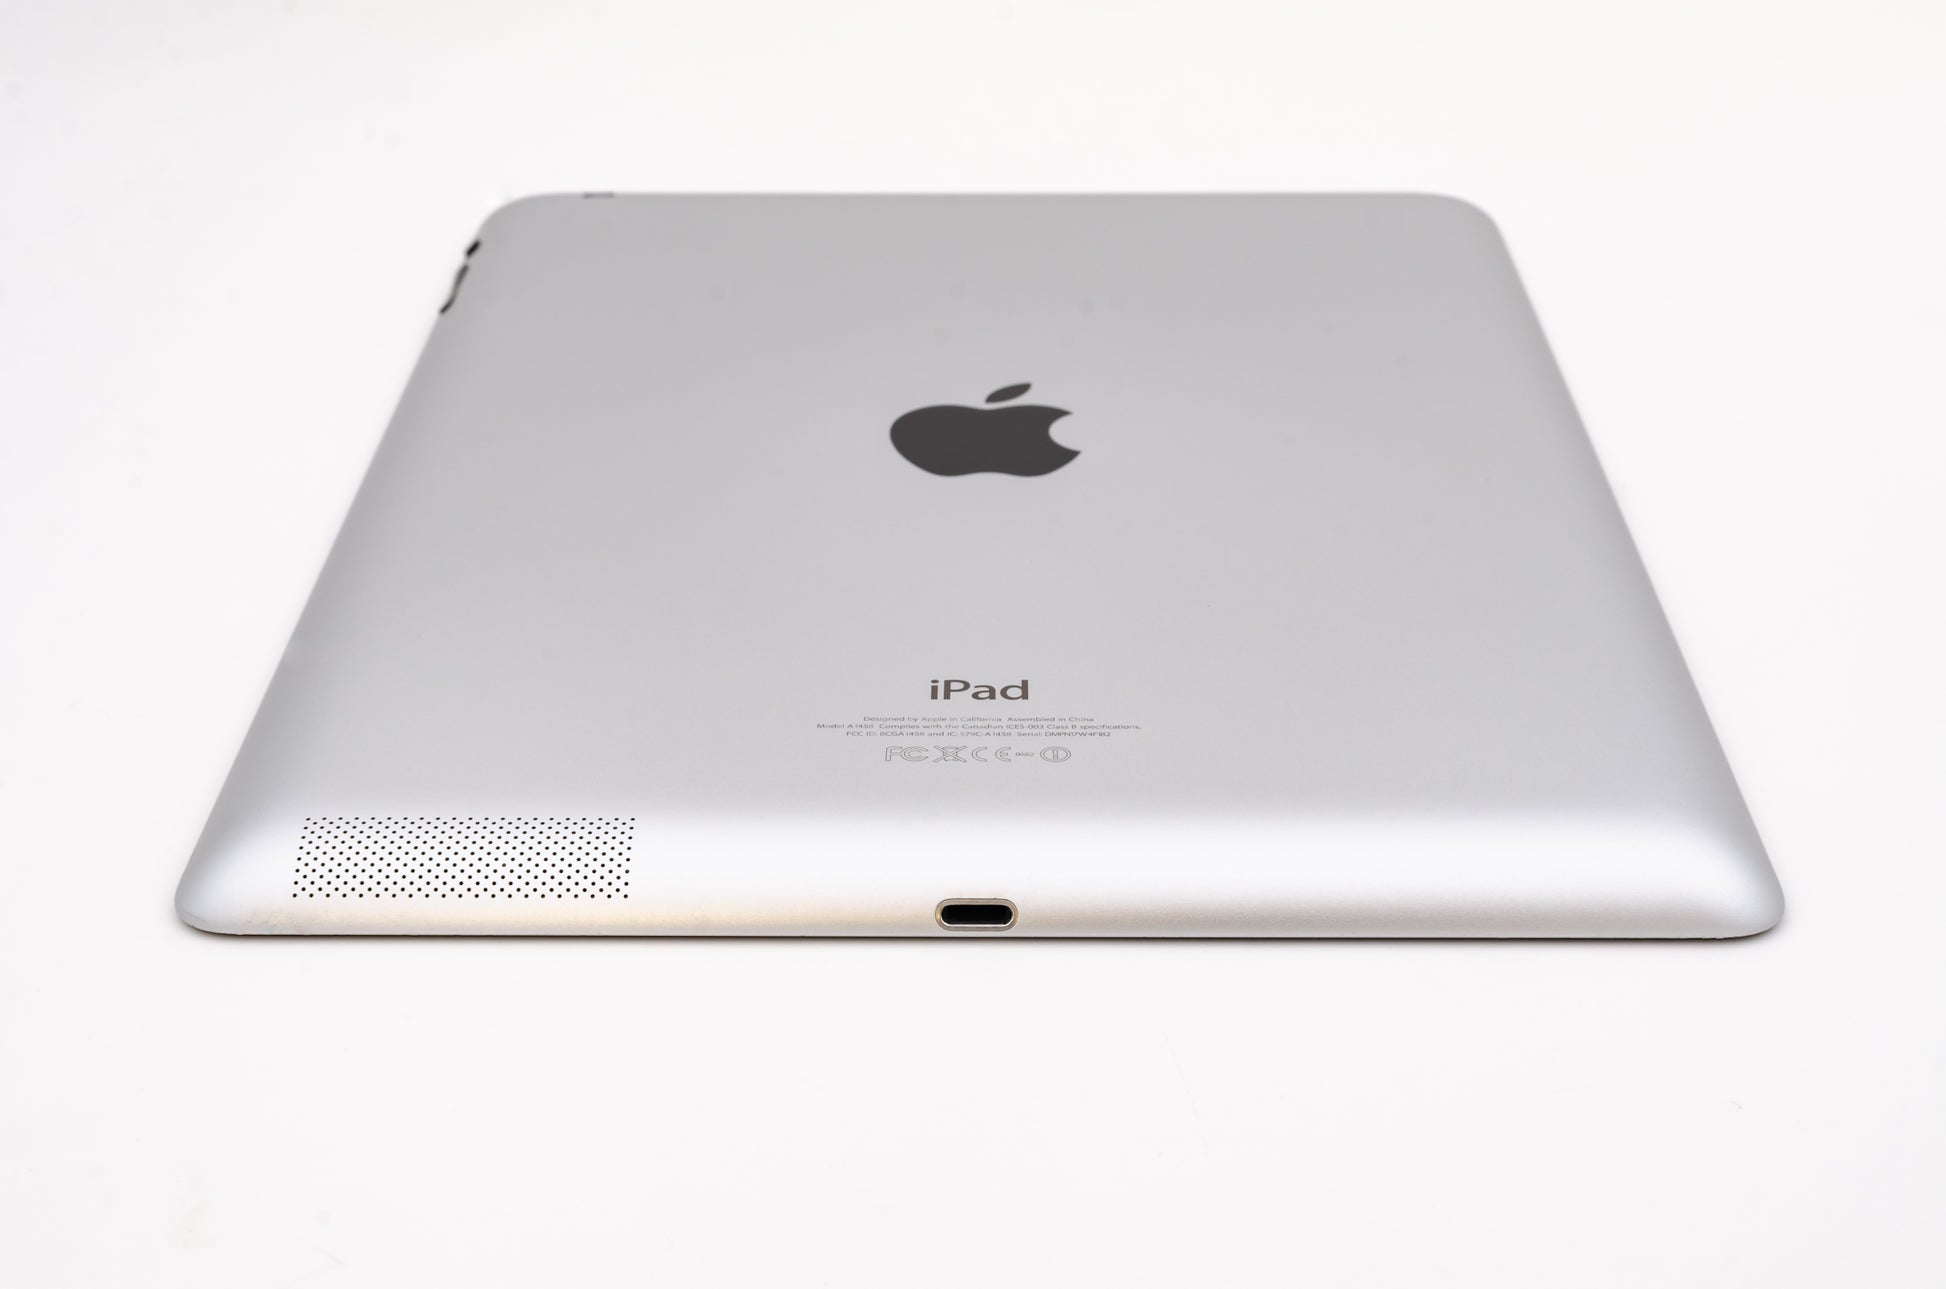 apple-2012-9.7-inch-ipad-4-a1460-silver/white-5